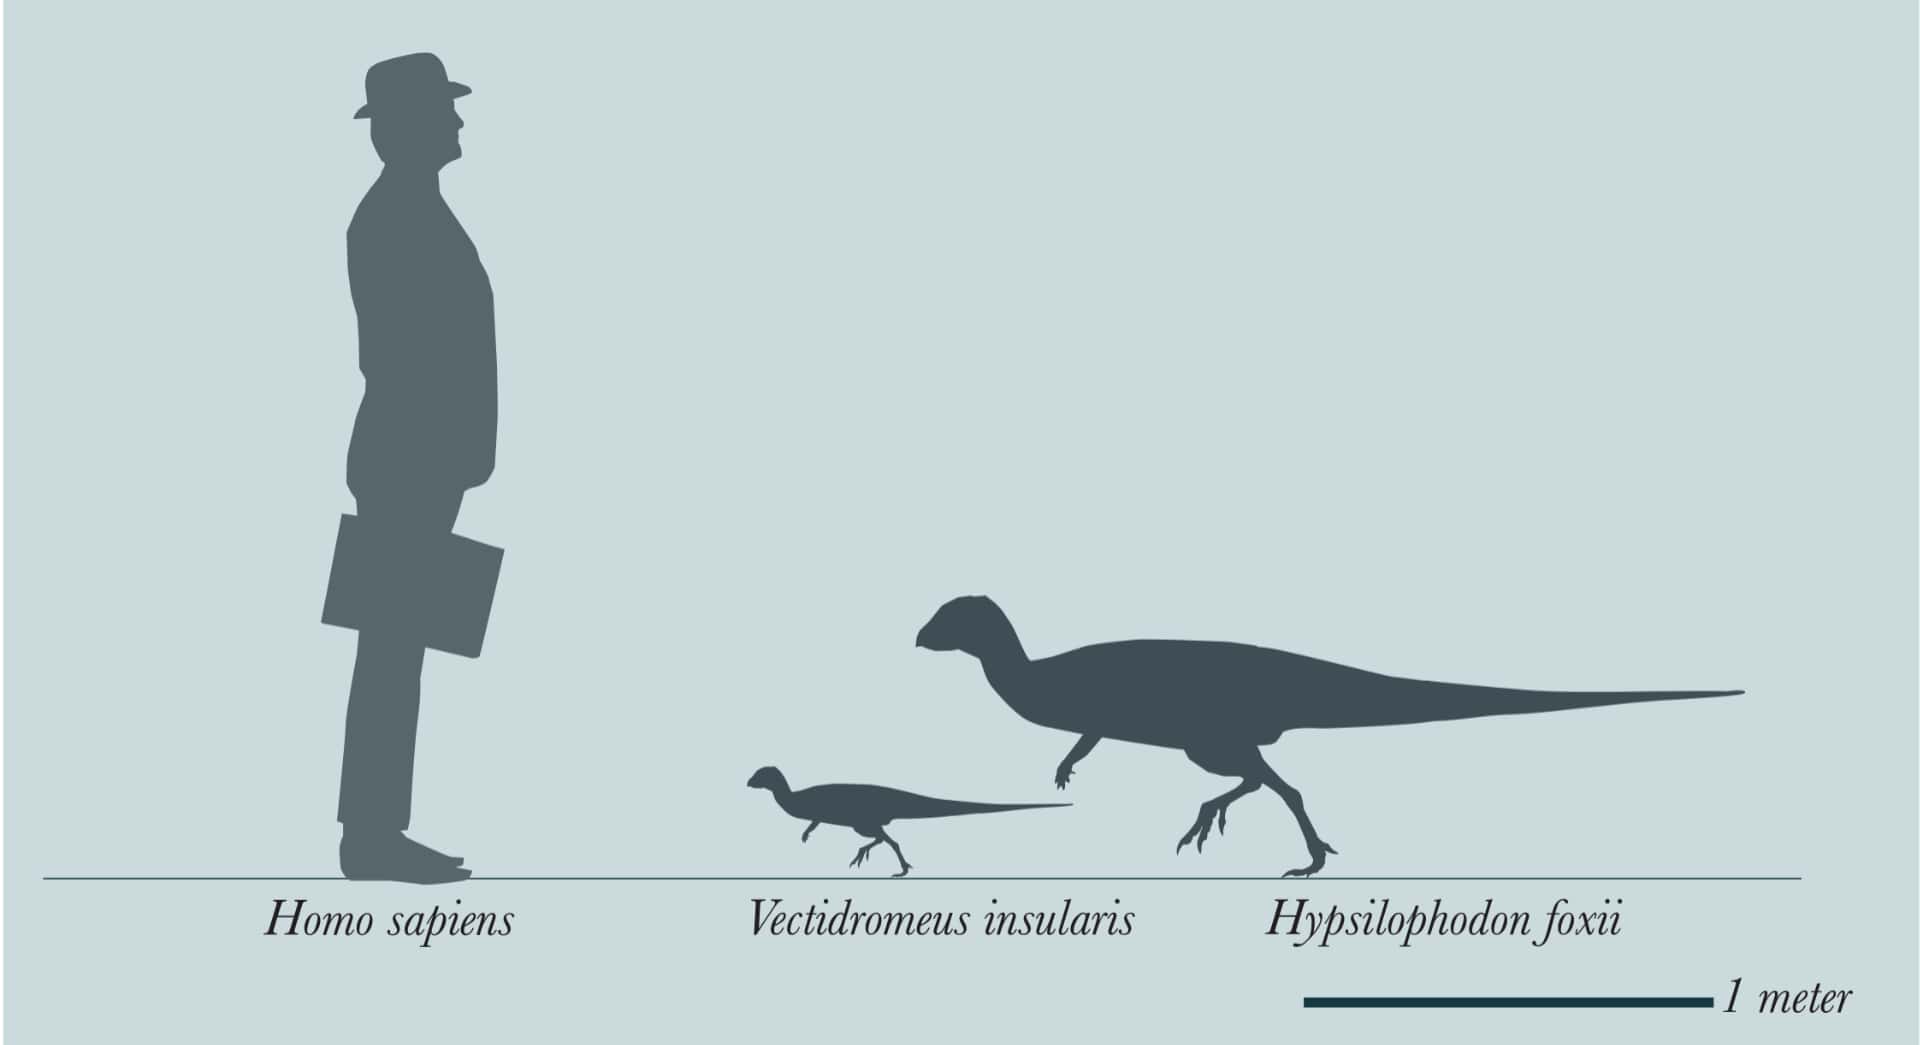 Vectidromeus to scale with a human and Hypsilophodony